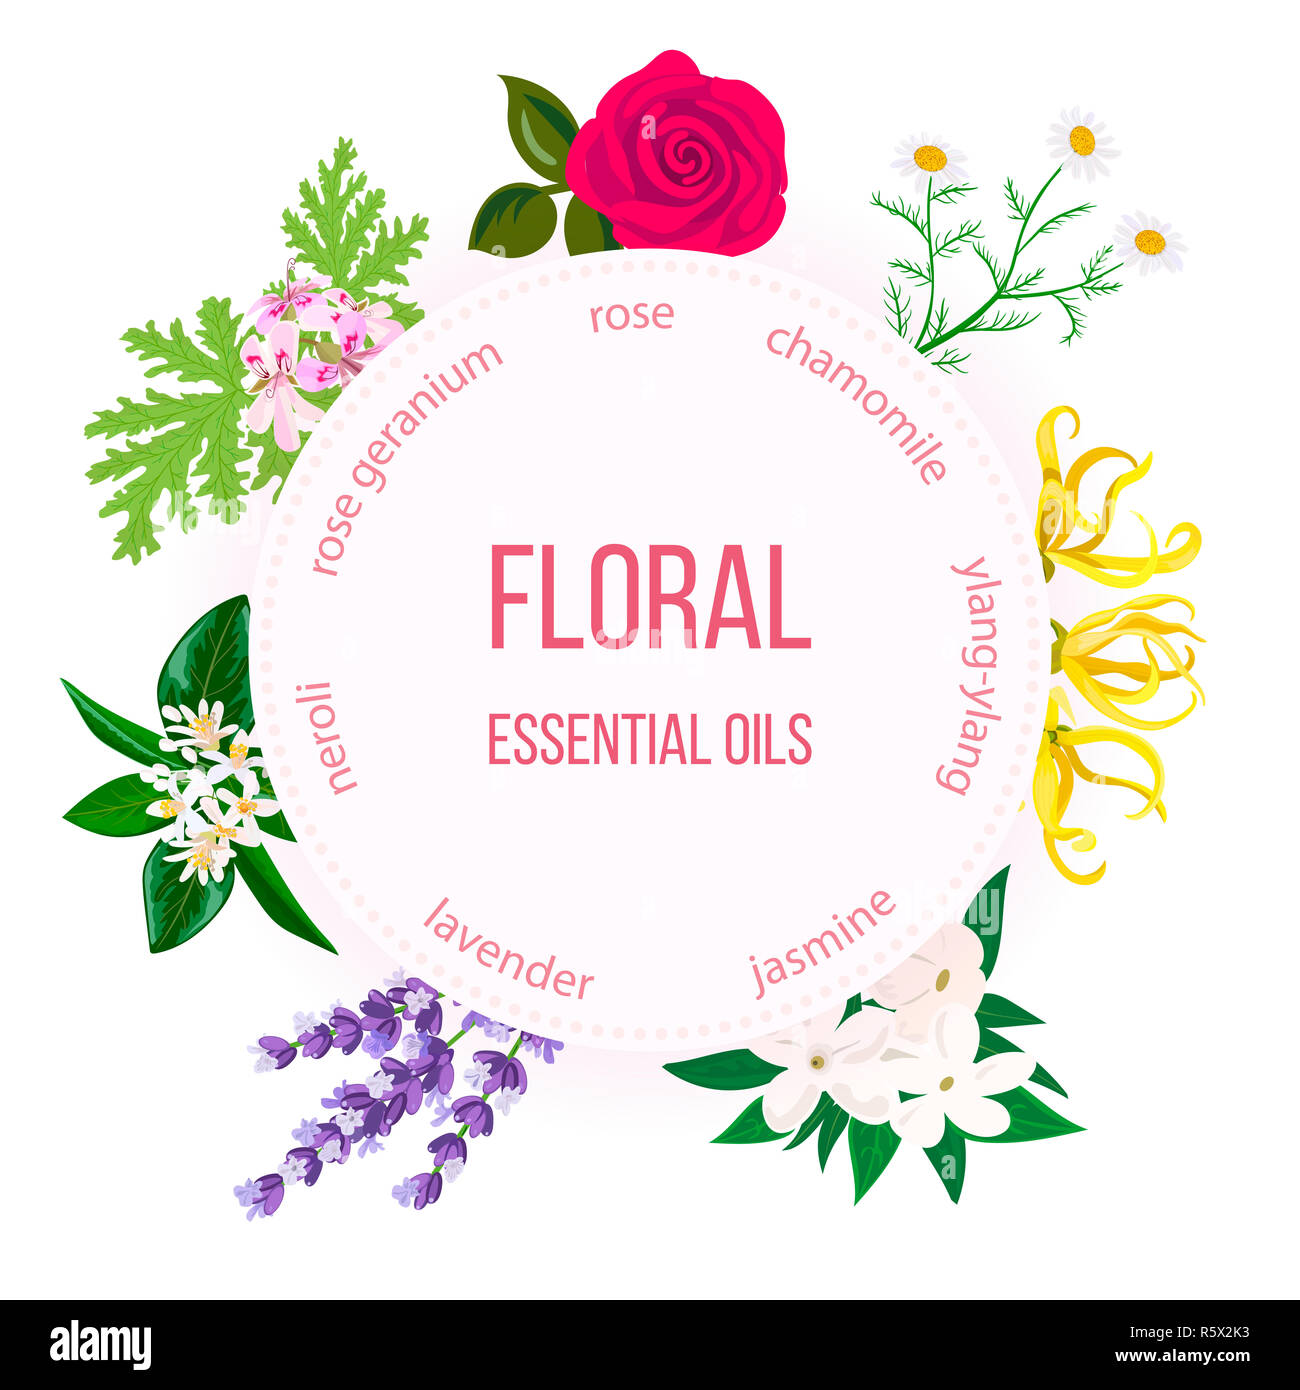 Essential oil round emblem. Rose, Chamomile, jasmine, Ylang-ylang, , neroli, Lavender, rose Geranium Stock Photo